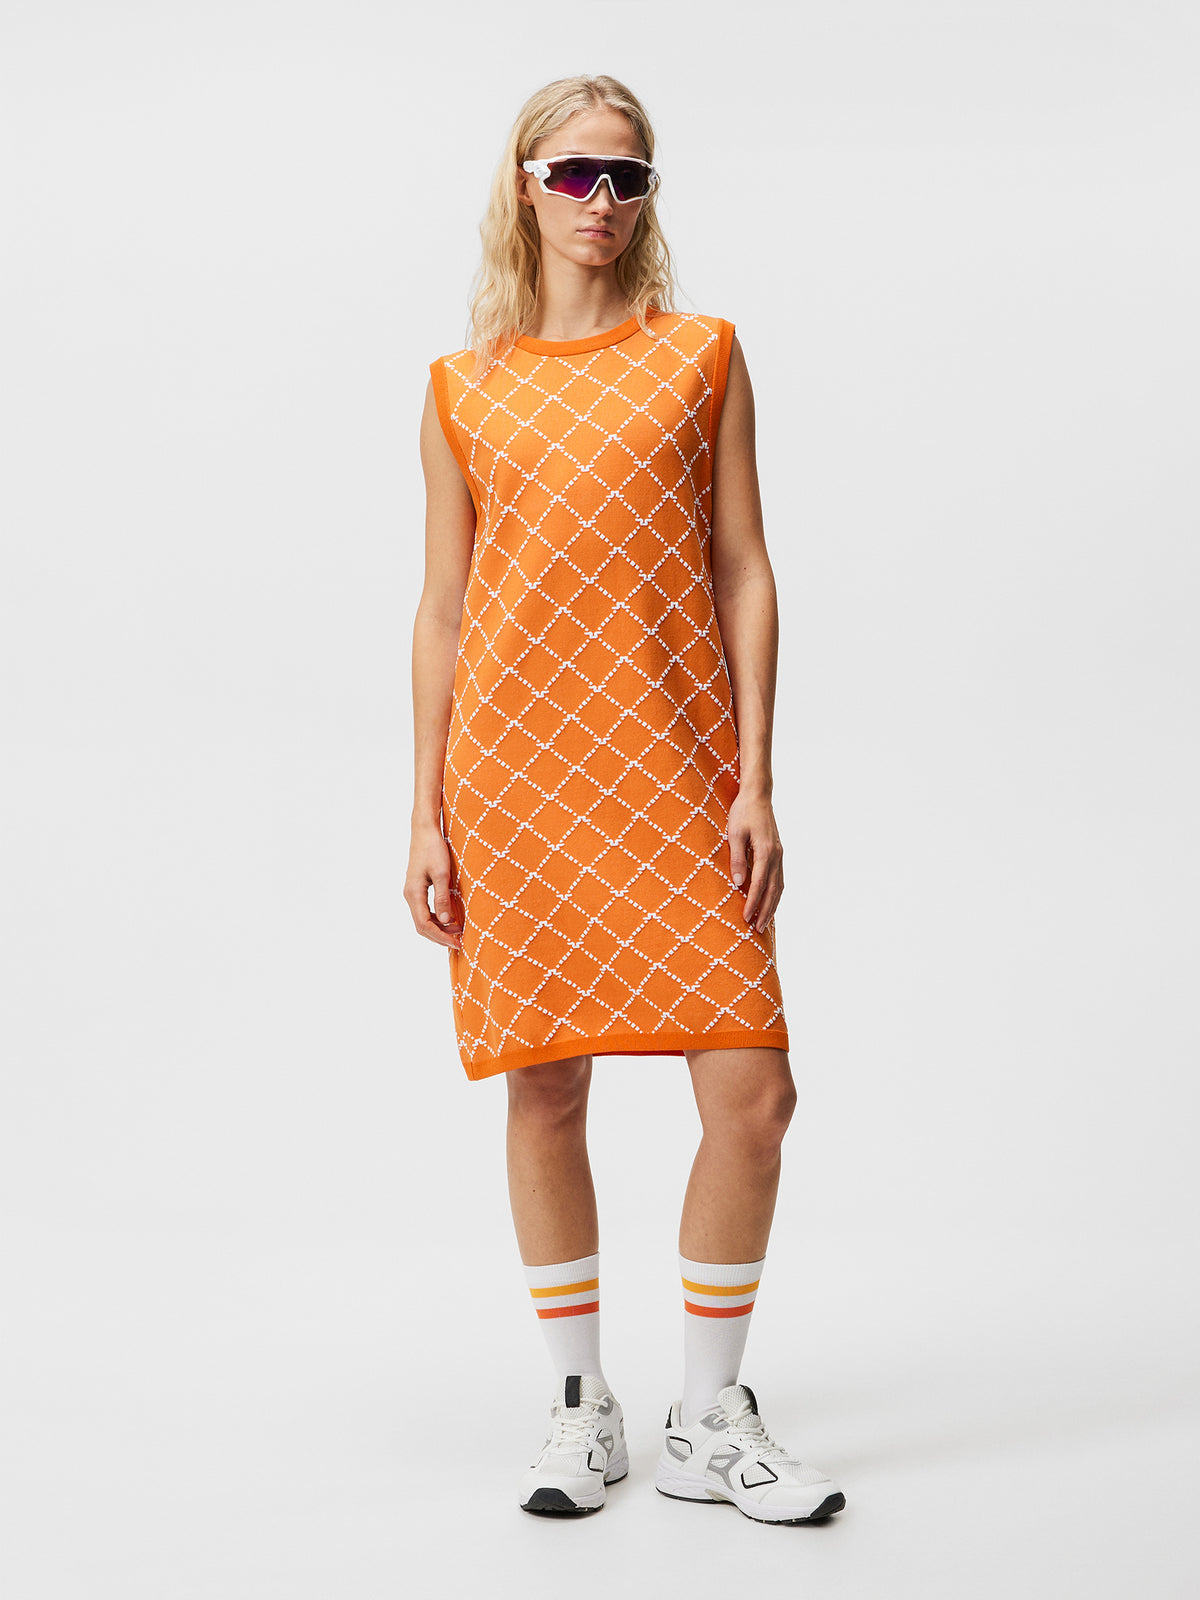 Fiona Knitted Dress / Russet Orange